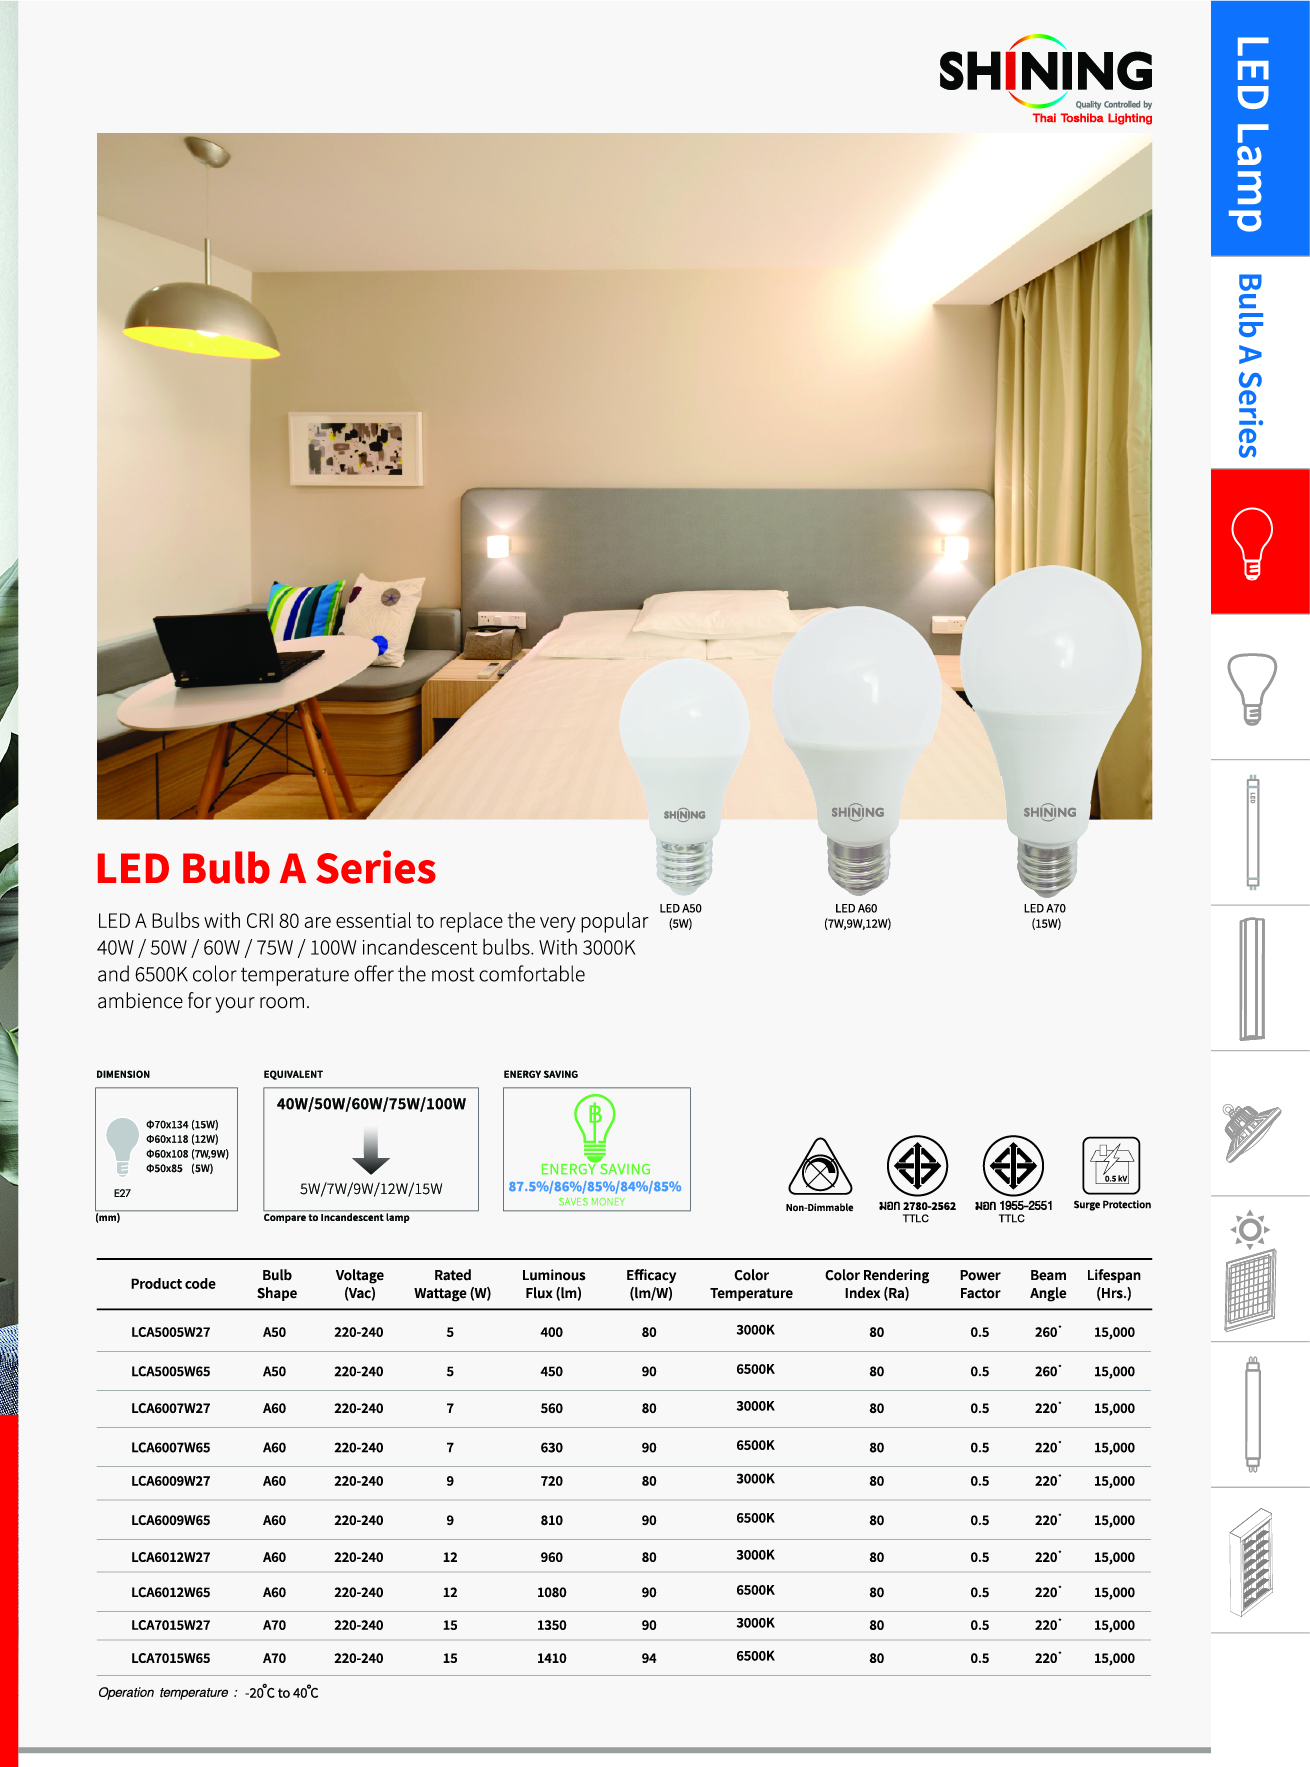 LED bulb 7W Daylight - toshibalight